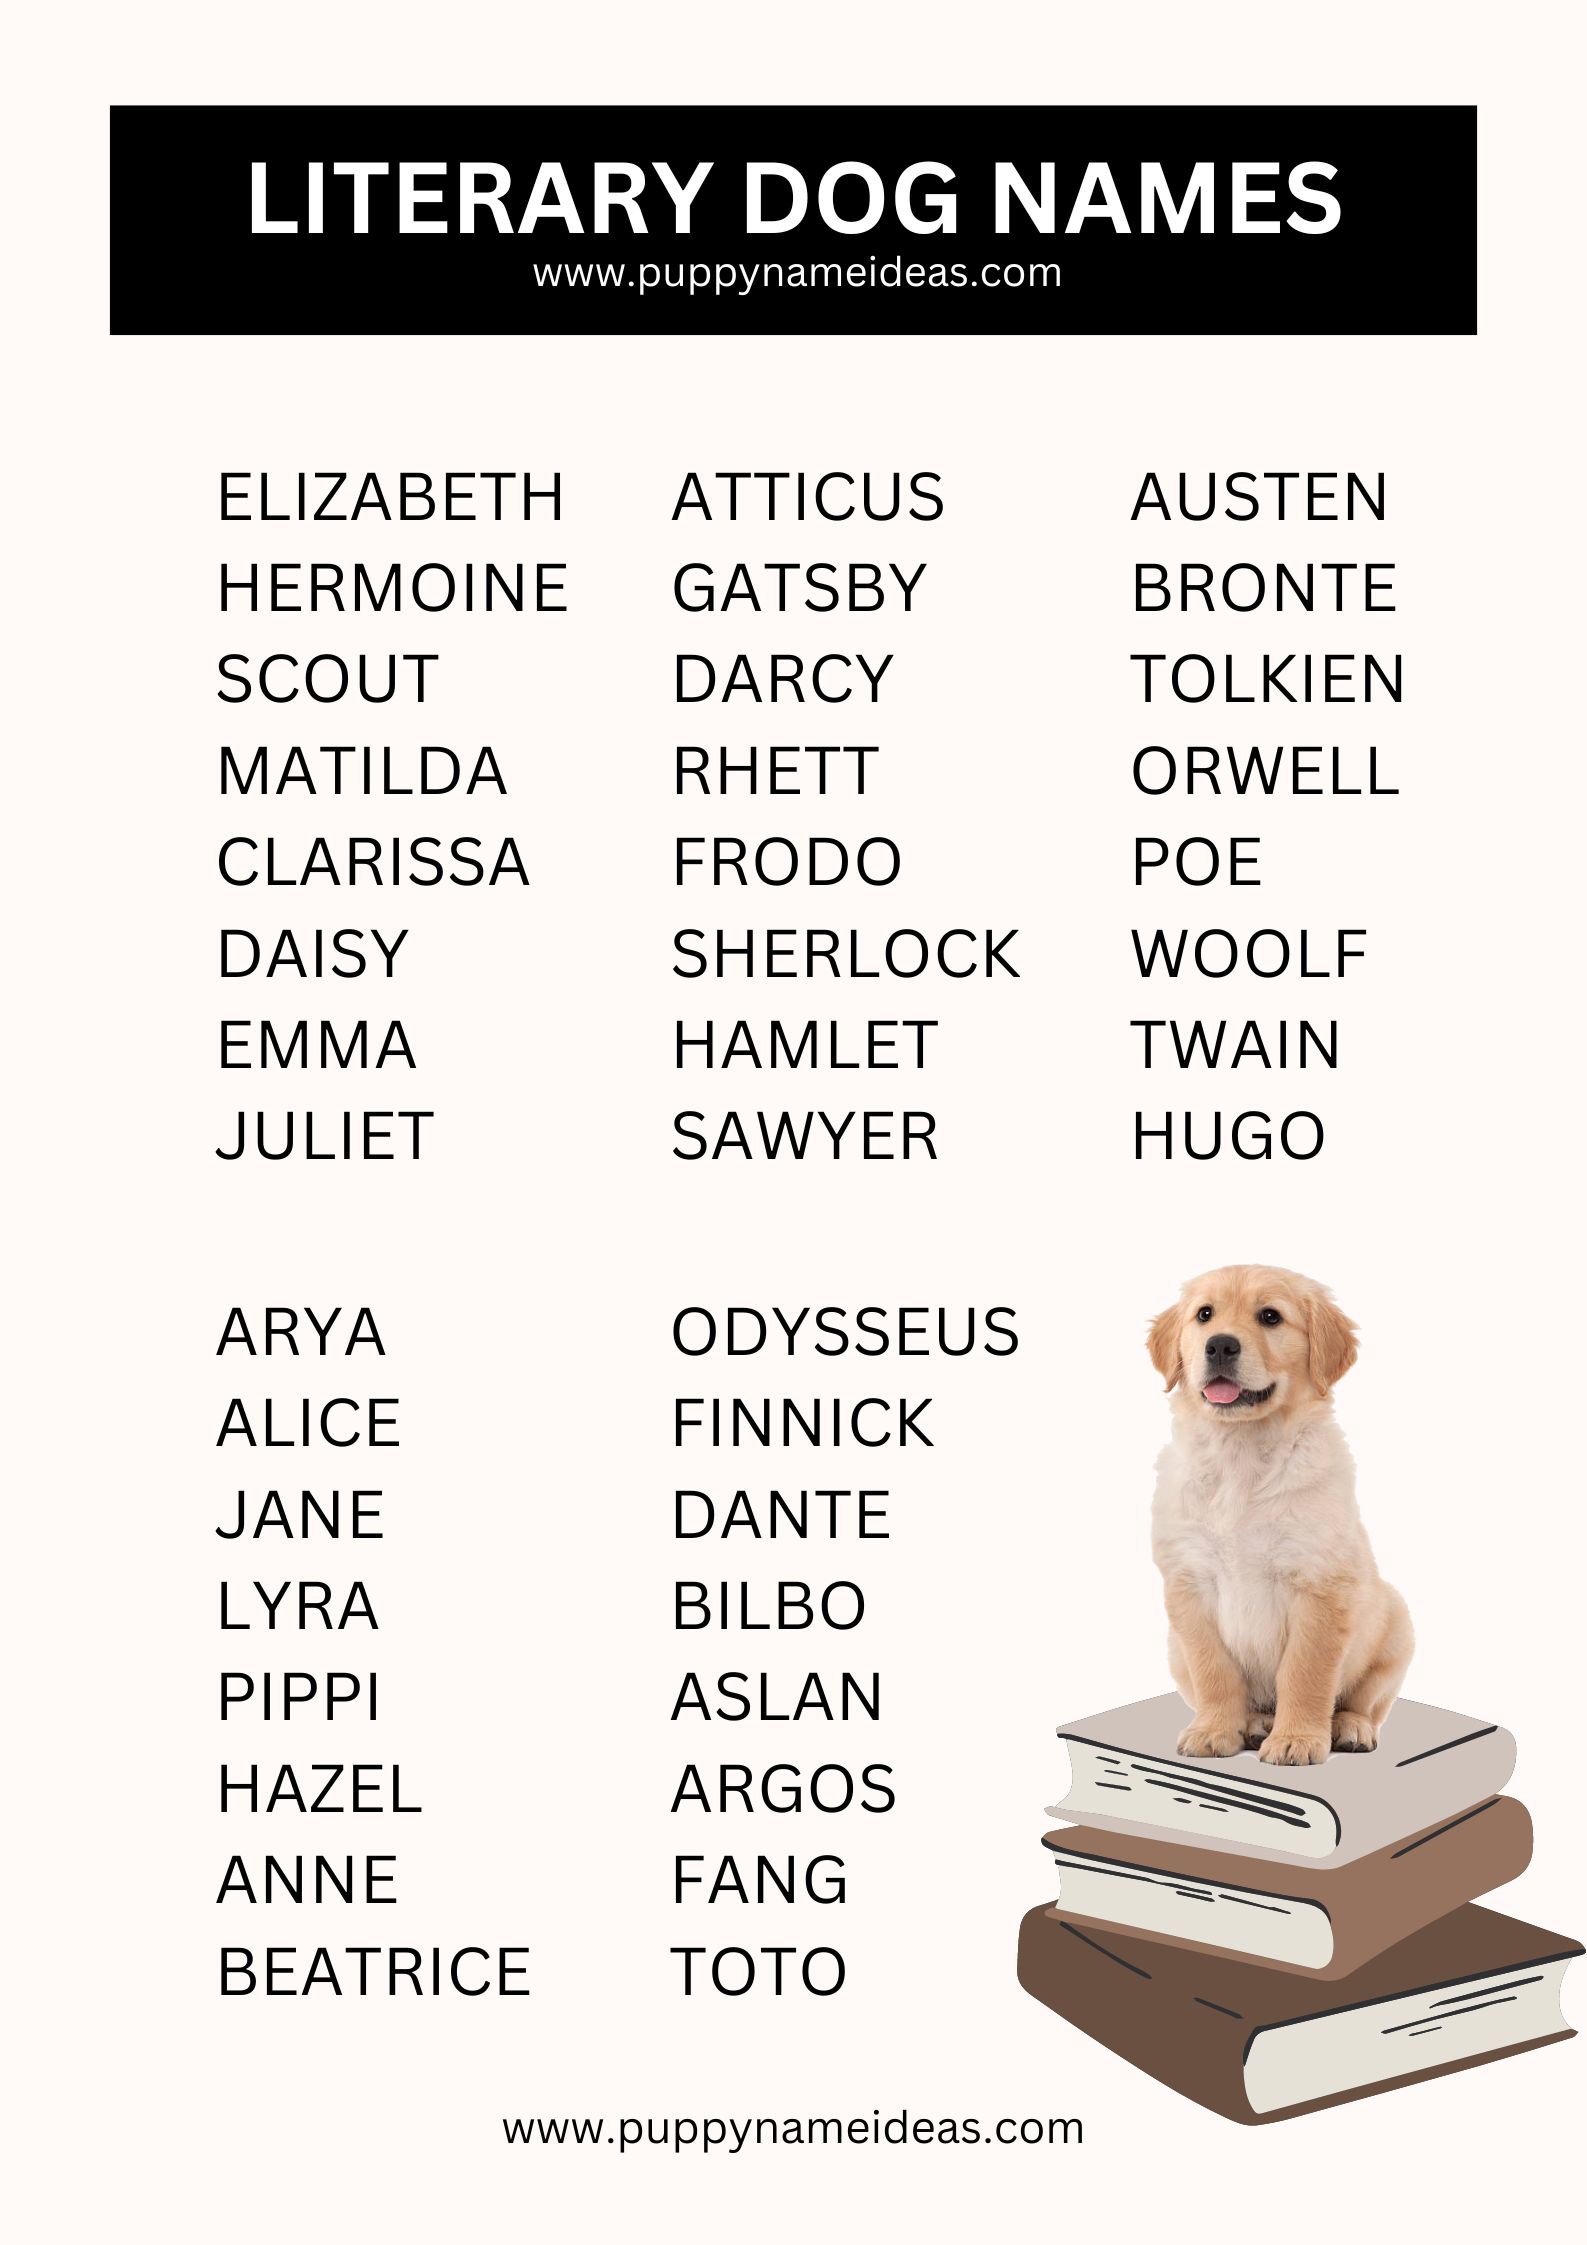 list of literary dog names